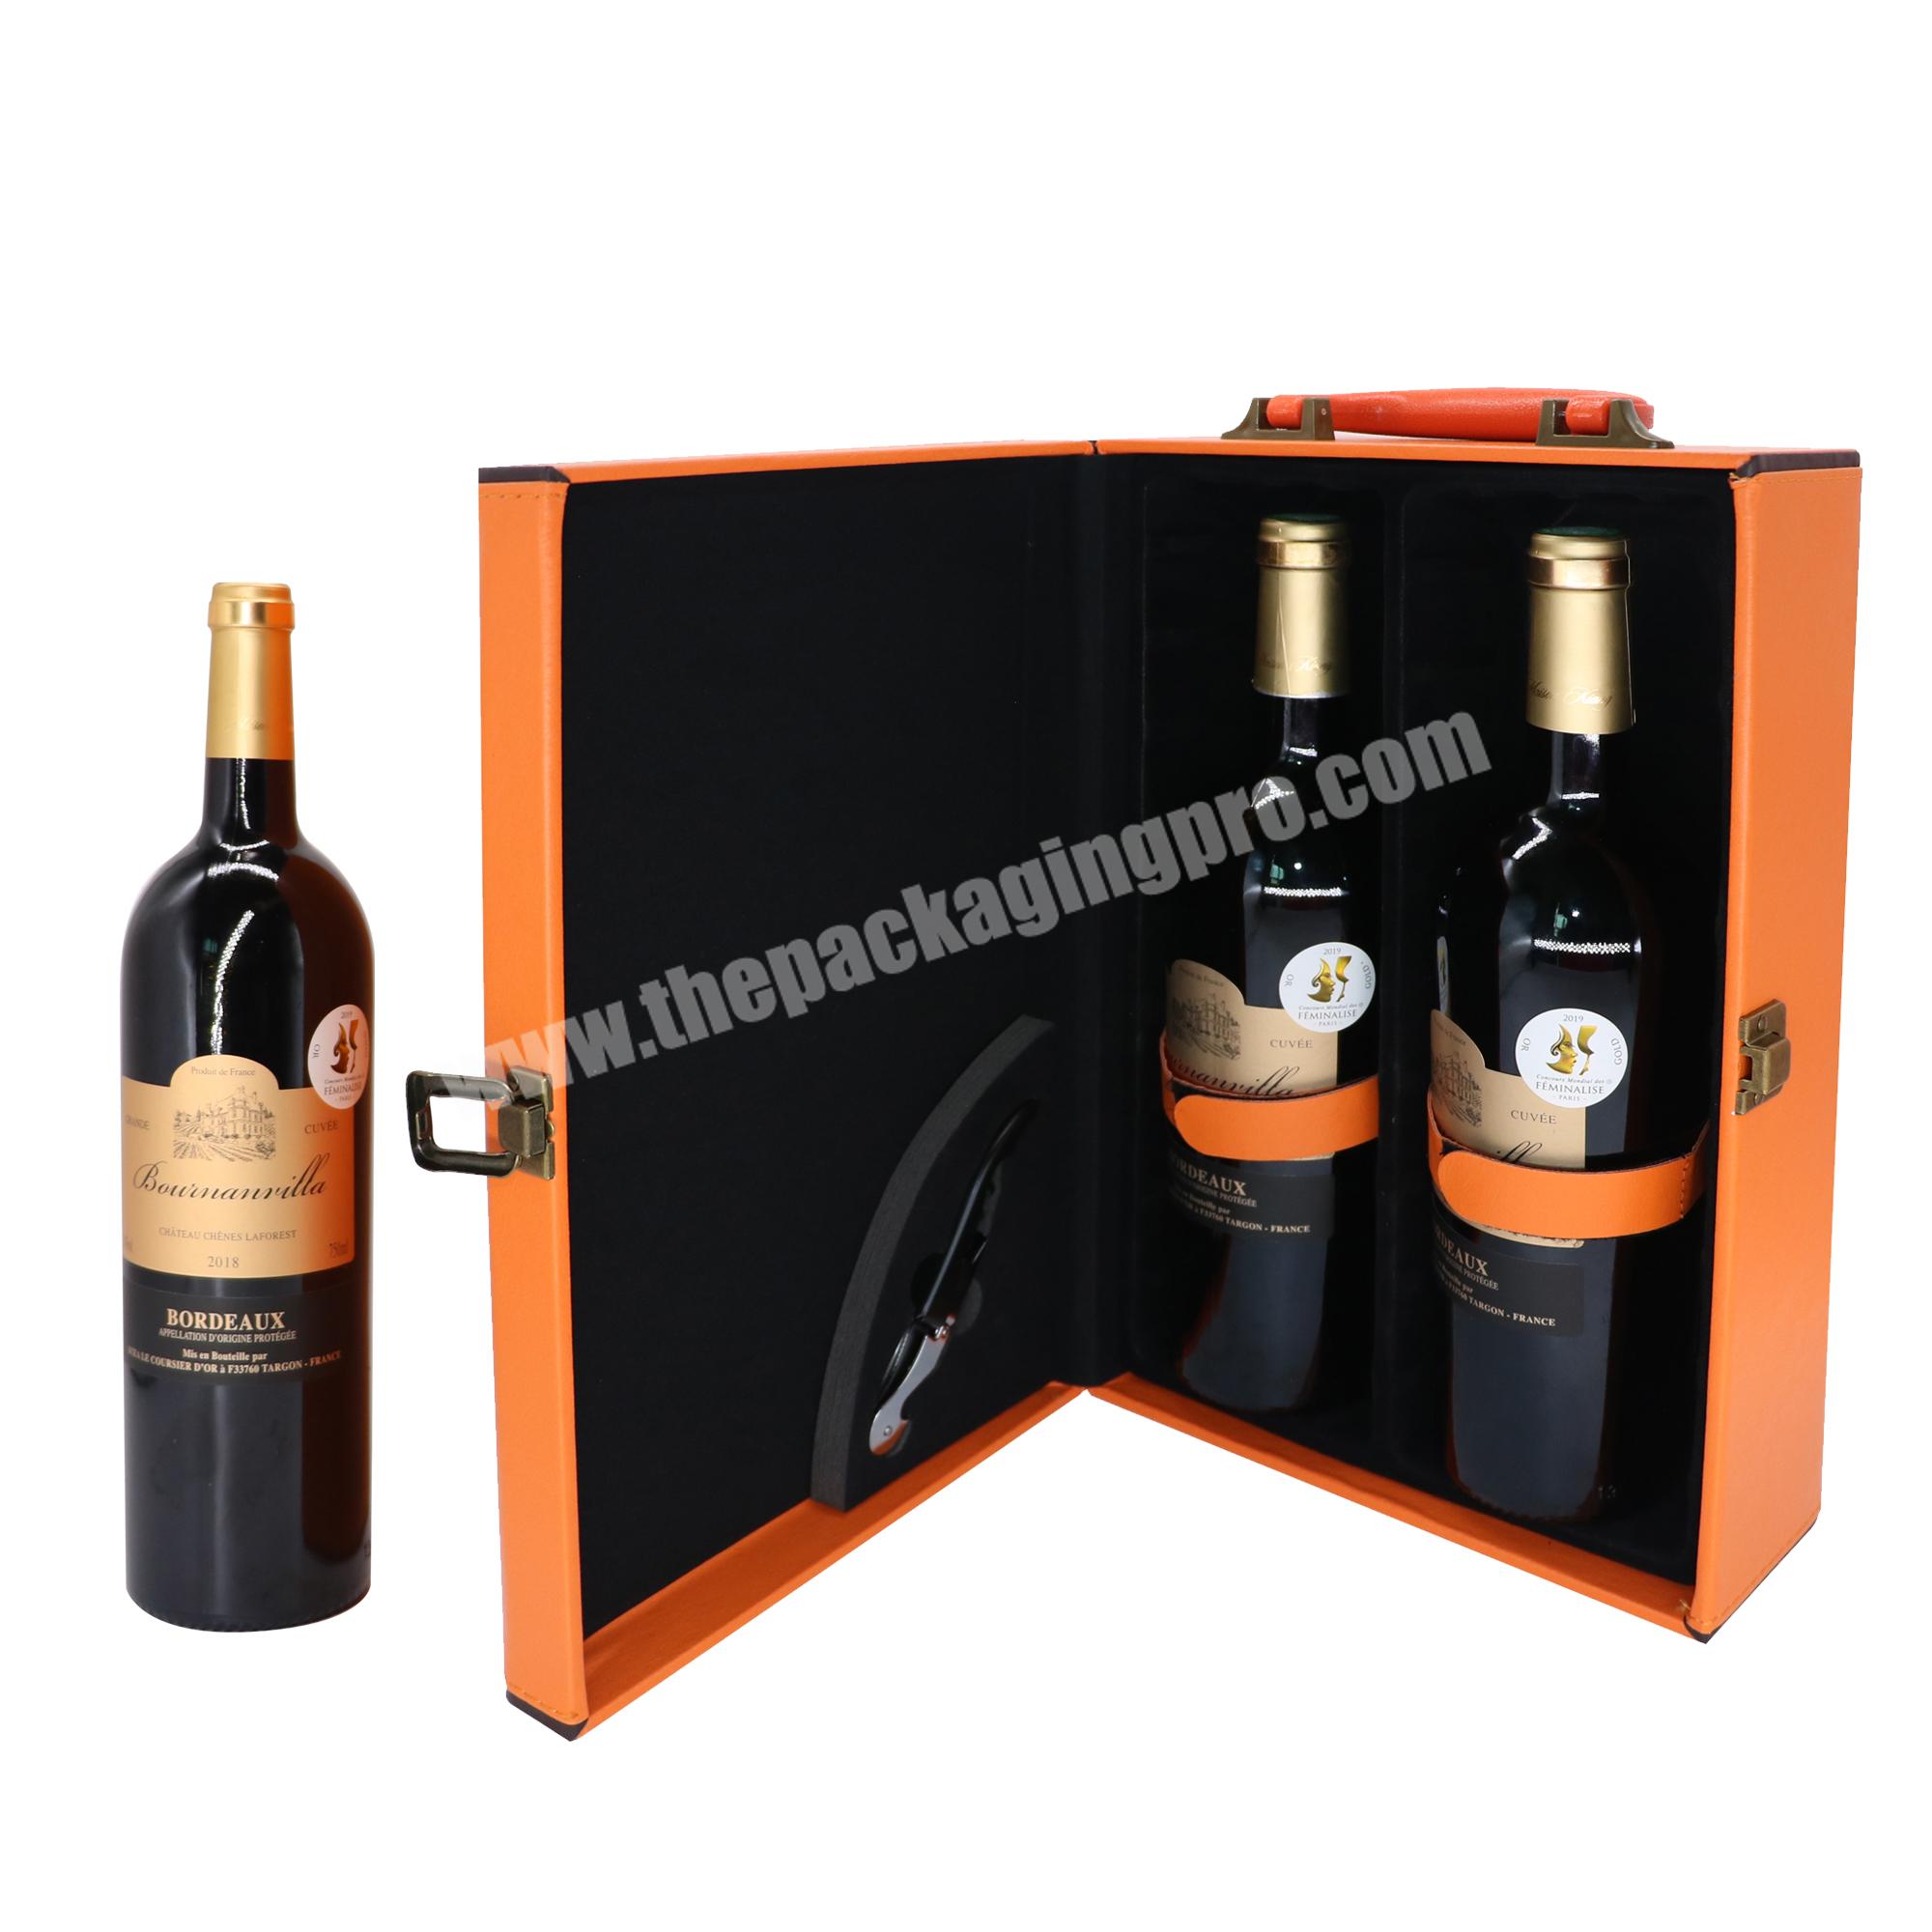 OEM luxury wine boxes set 2 bottle wine box portable wine gift box with handles